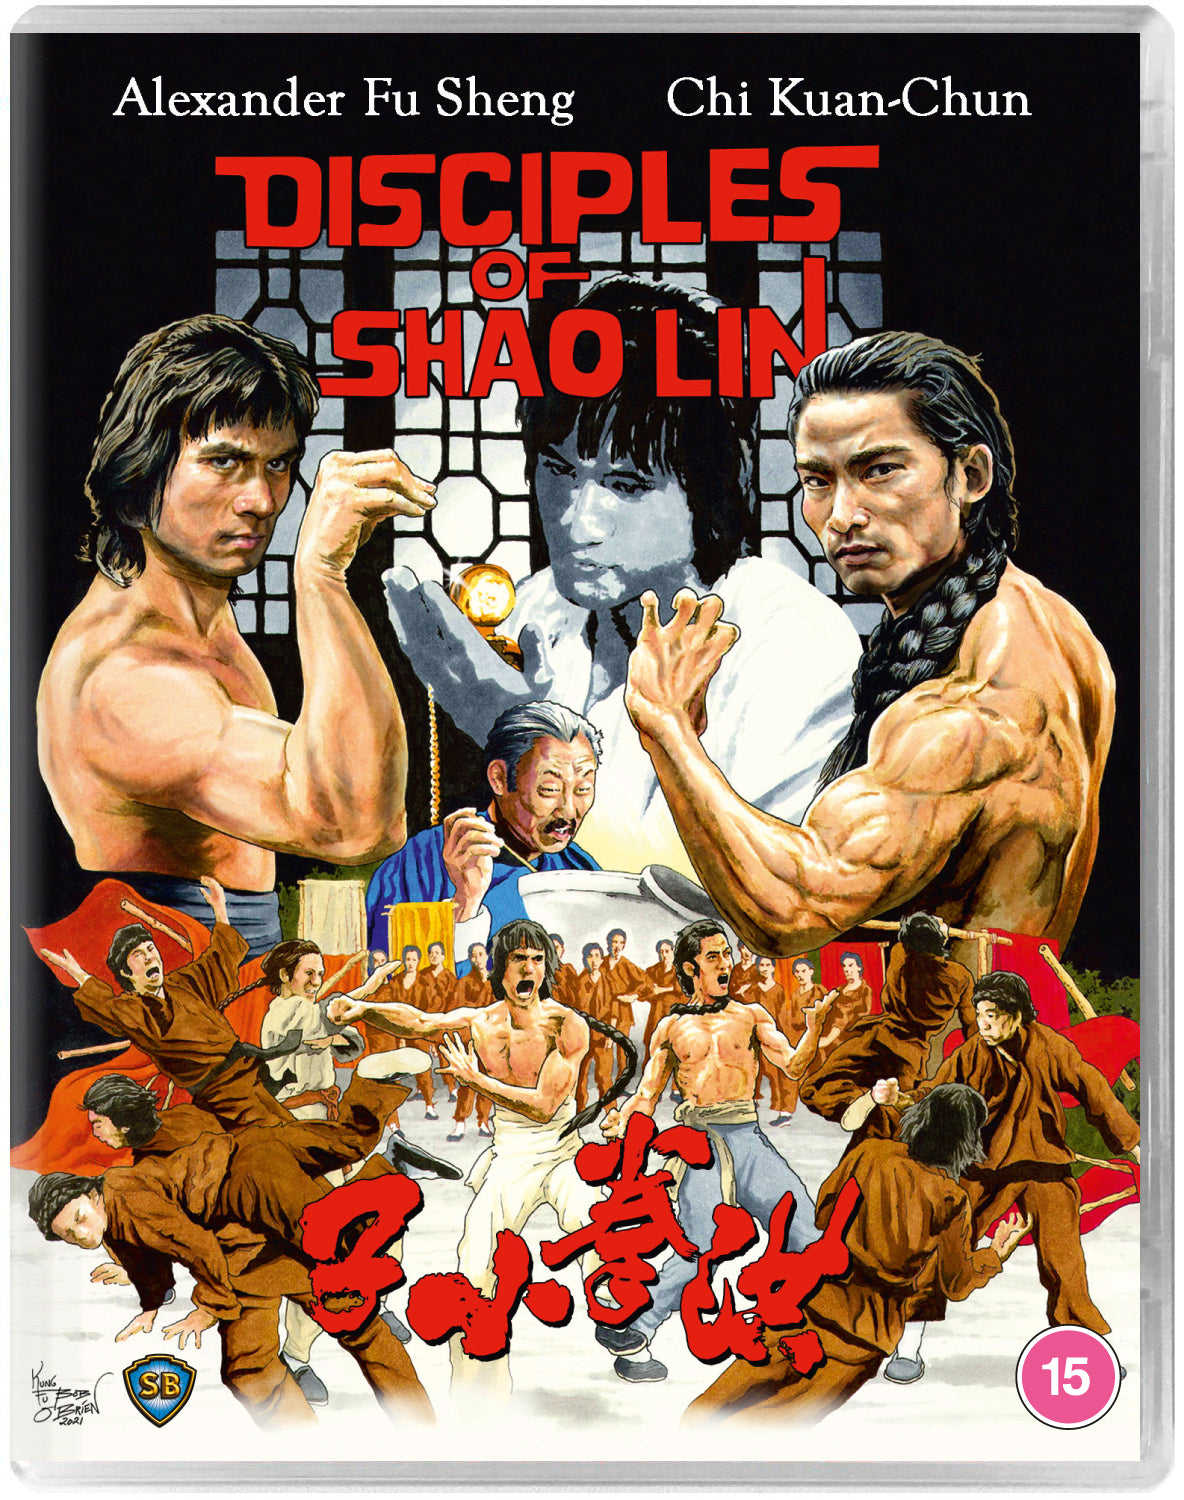 Disciples of Shaolin - 88 Asia 28